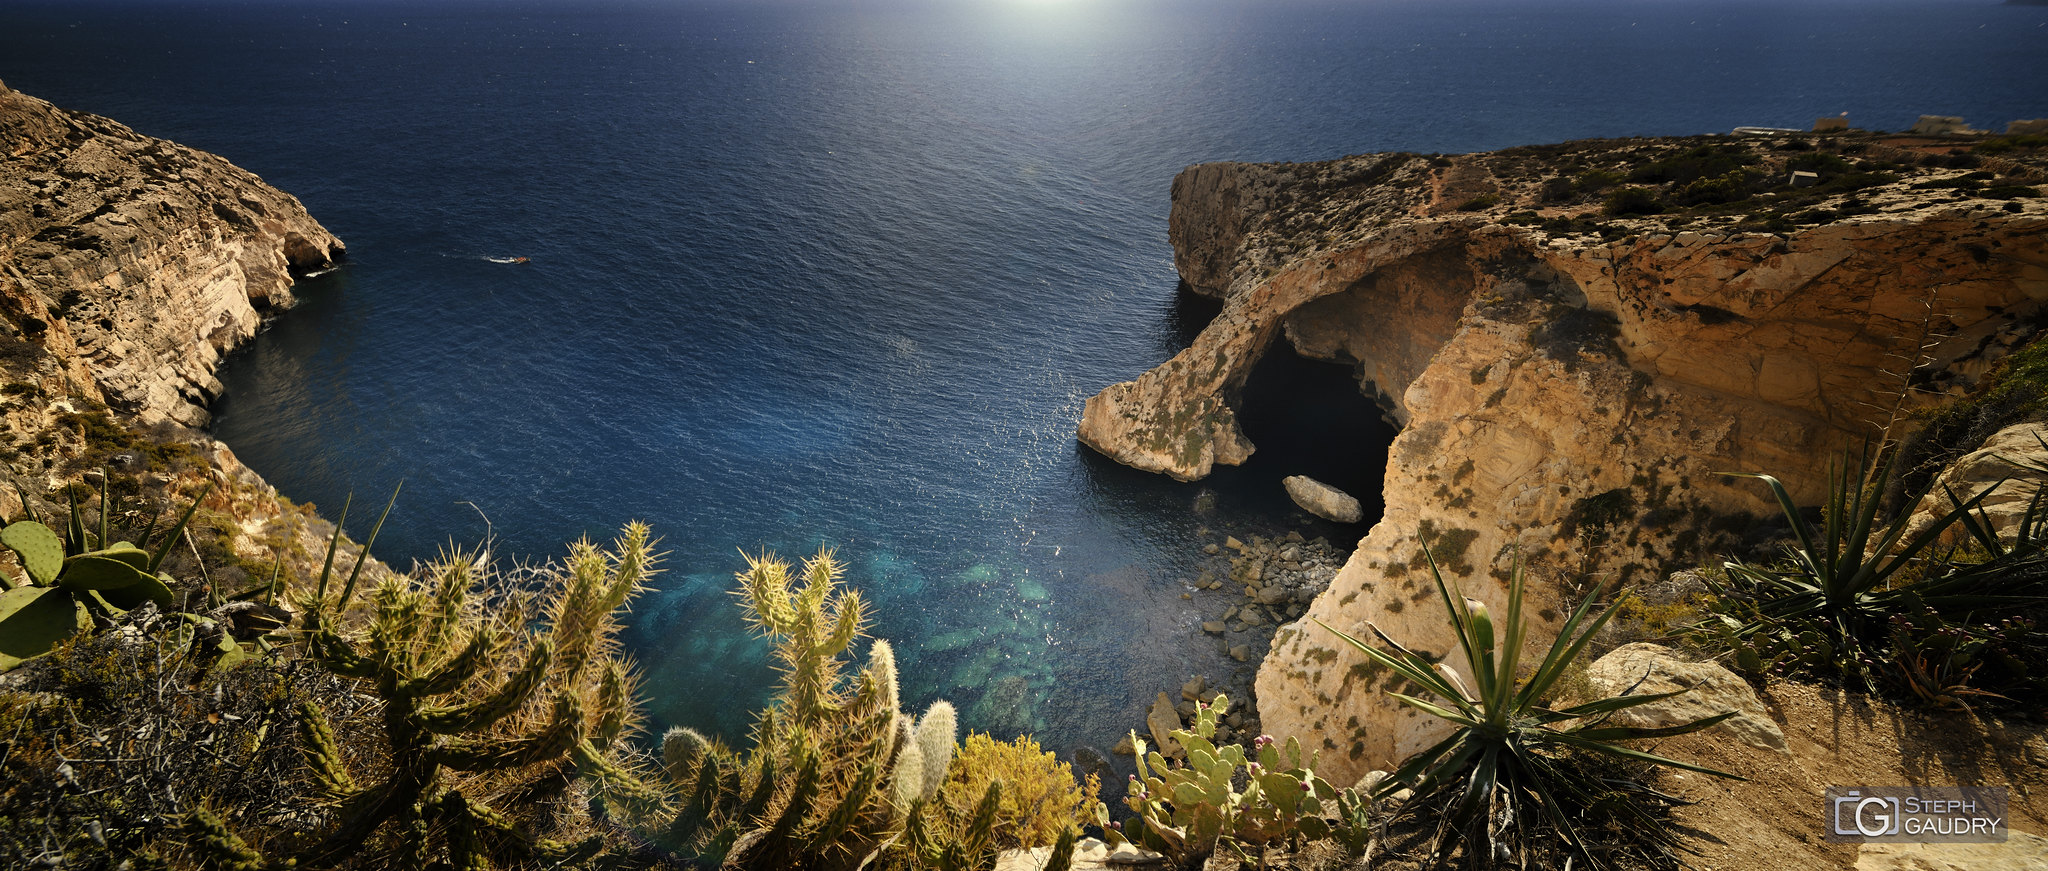 La grotte bleue à Malte [Klik om de diavoorstelling te starten]